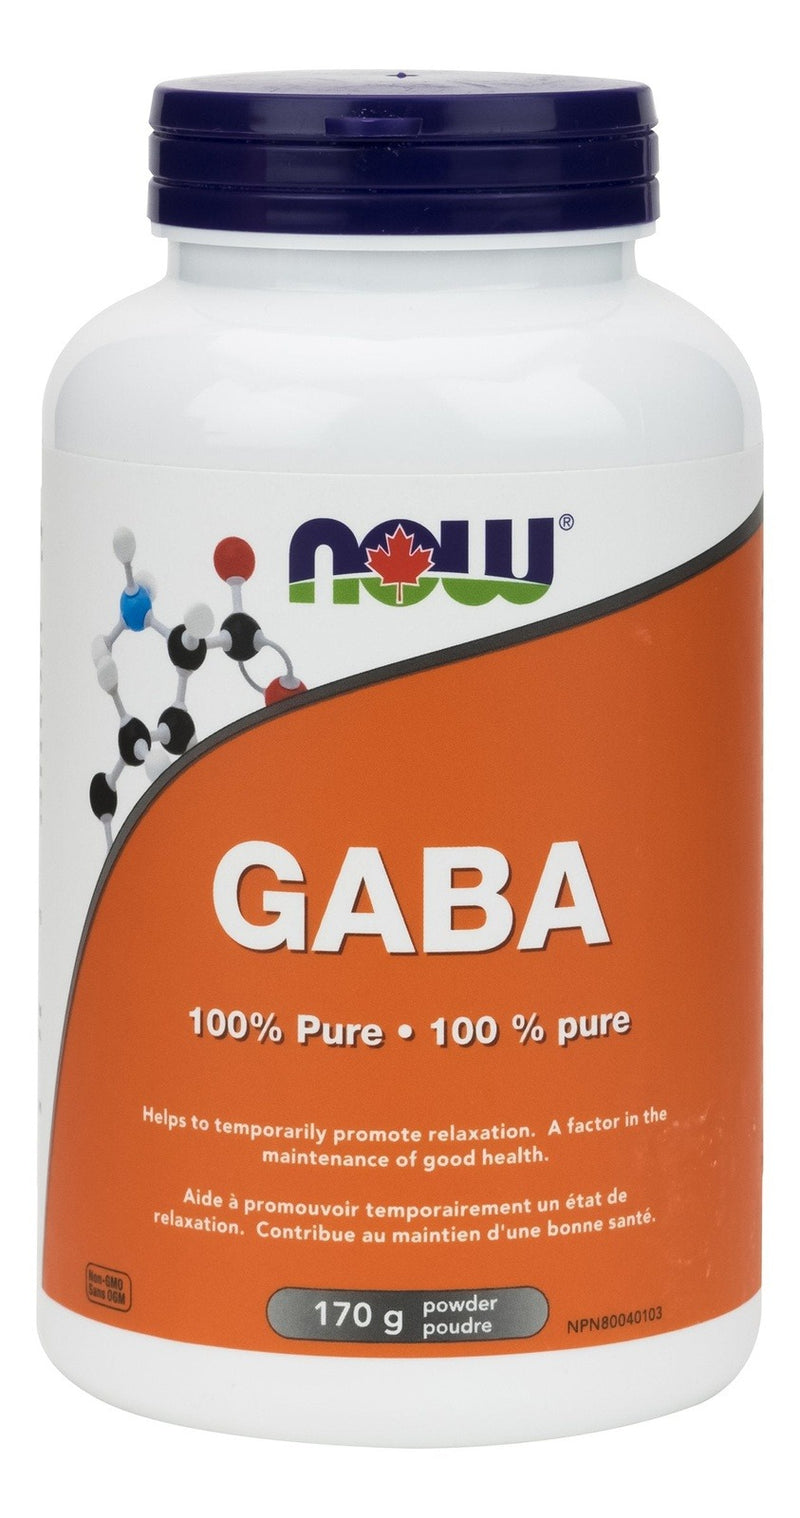 NOW Pure Gaba 170 g Image 1